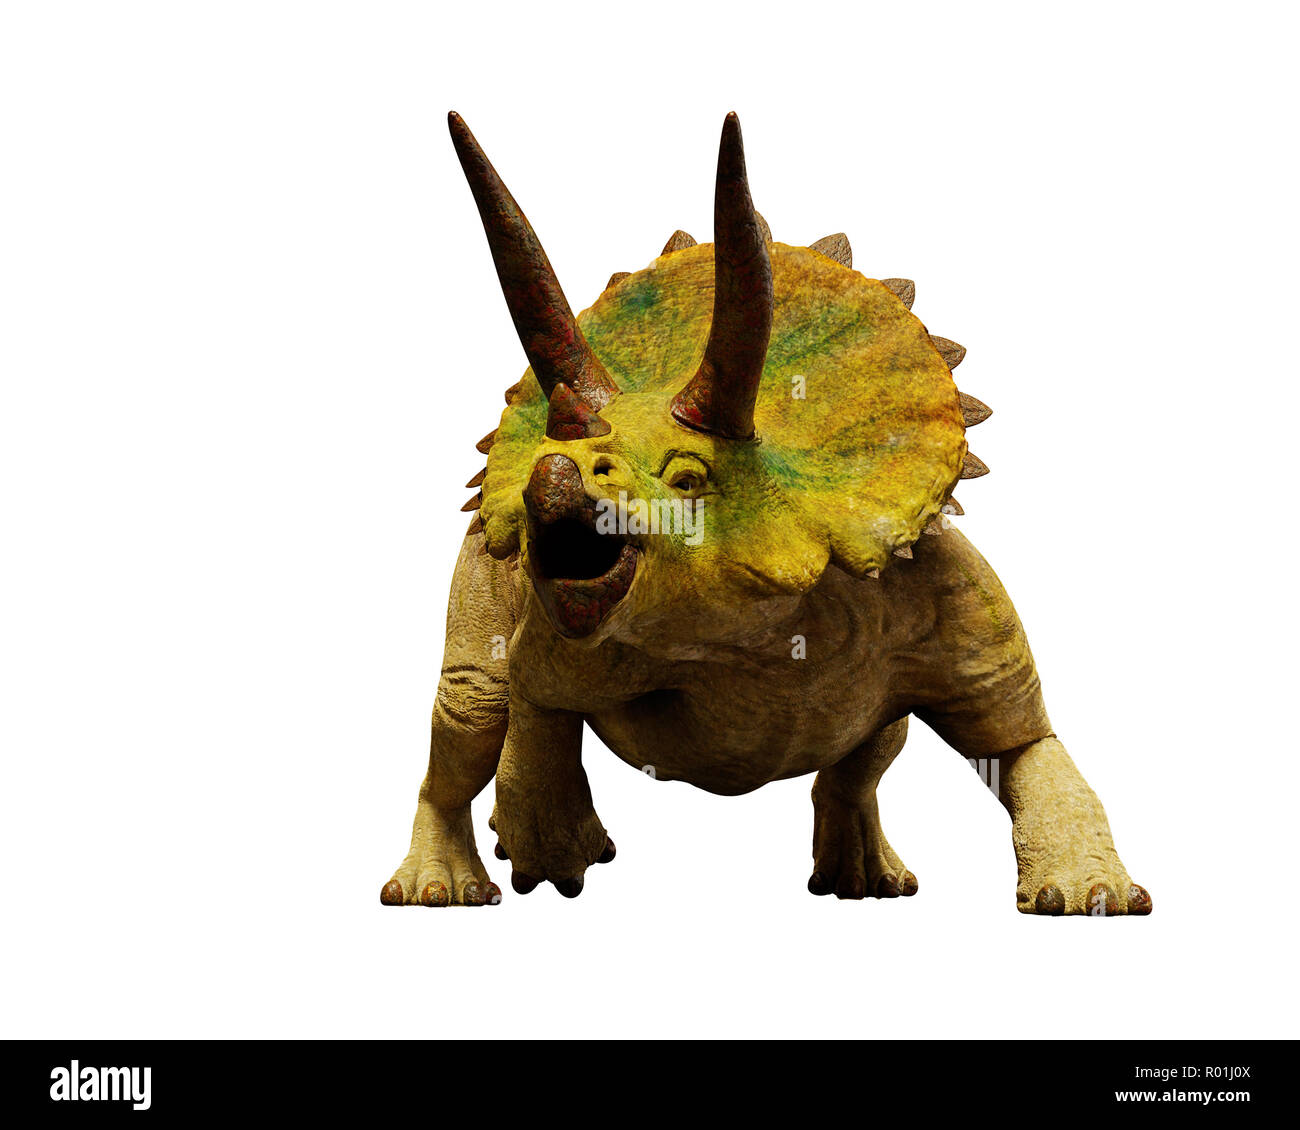 Triceratops horridus dinosauri estinti animali preistorici (3D render isolati su sfondo bianco) Foto Stock